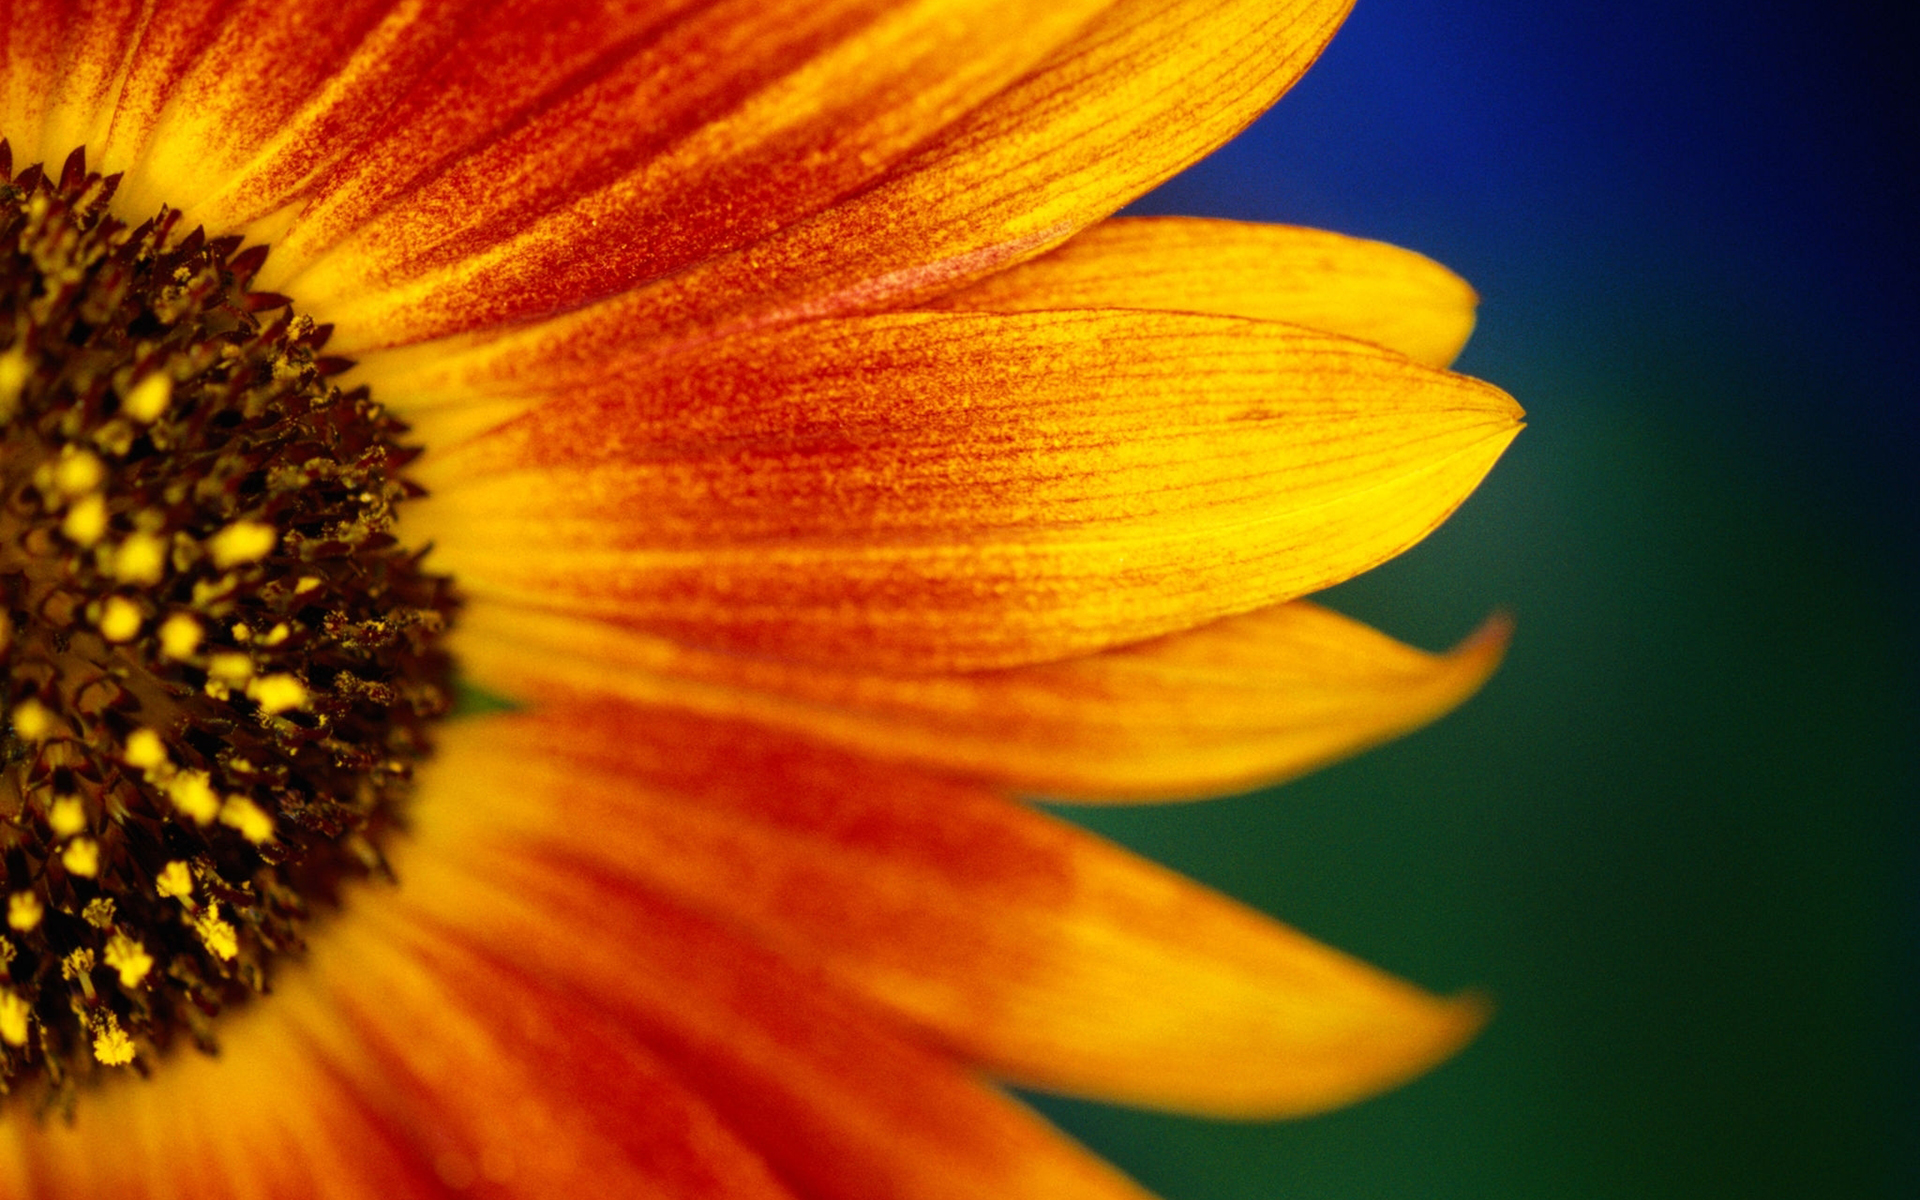 Nature Sunflower HD Wallpaper | Background Image